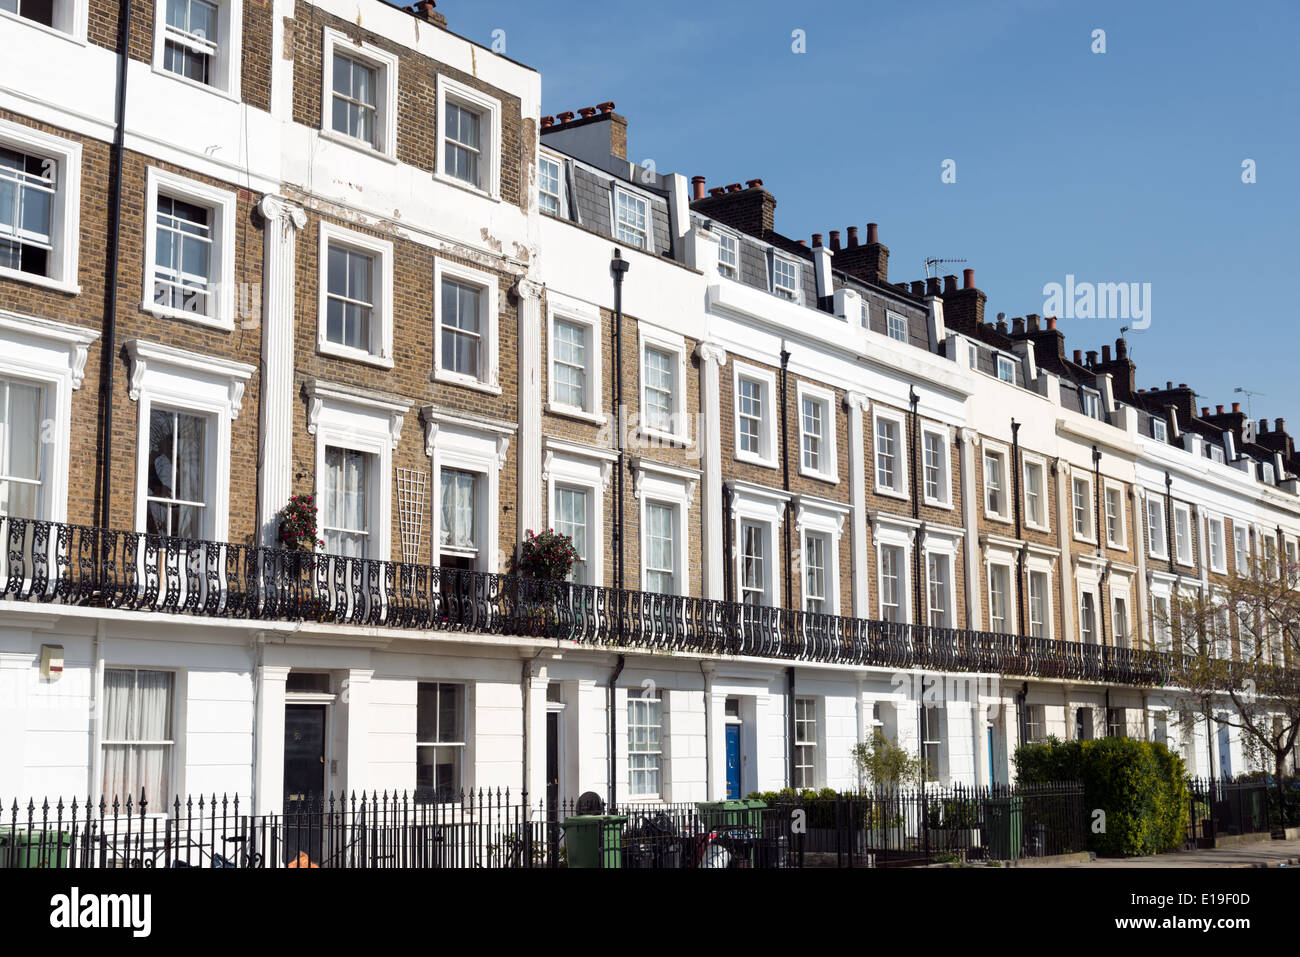 Row of Georgian terraced houses, Camden, North London, England, UK Stock Photo